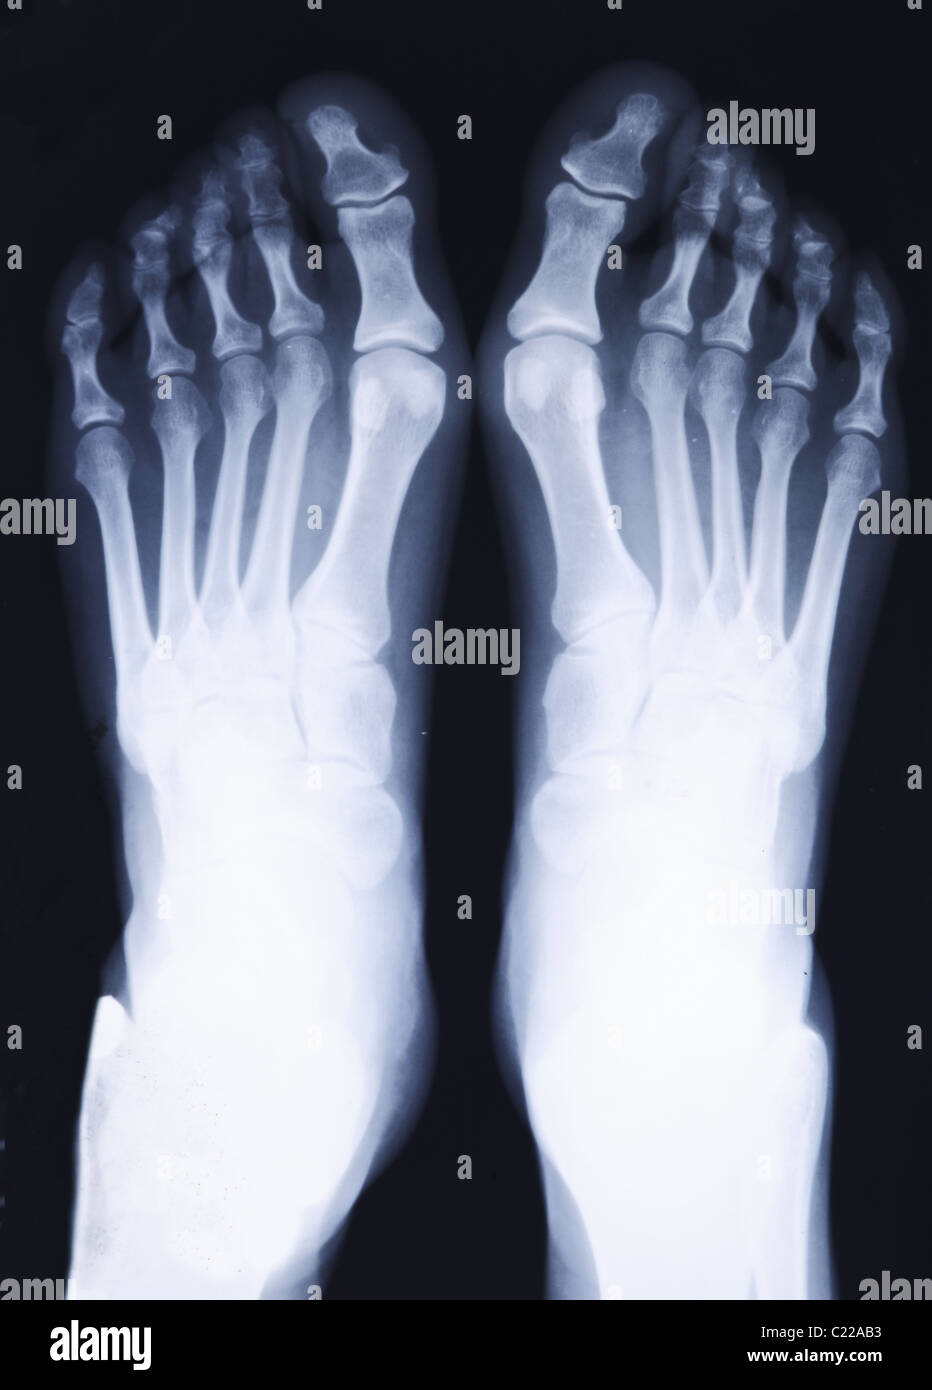 closeup image of classic xray image of feet Stock Photo